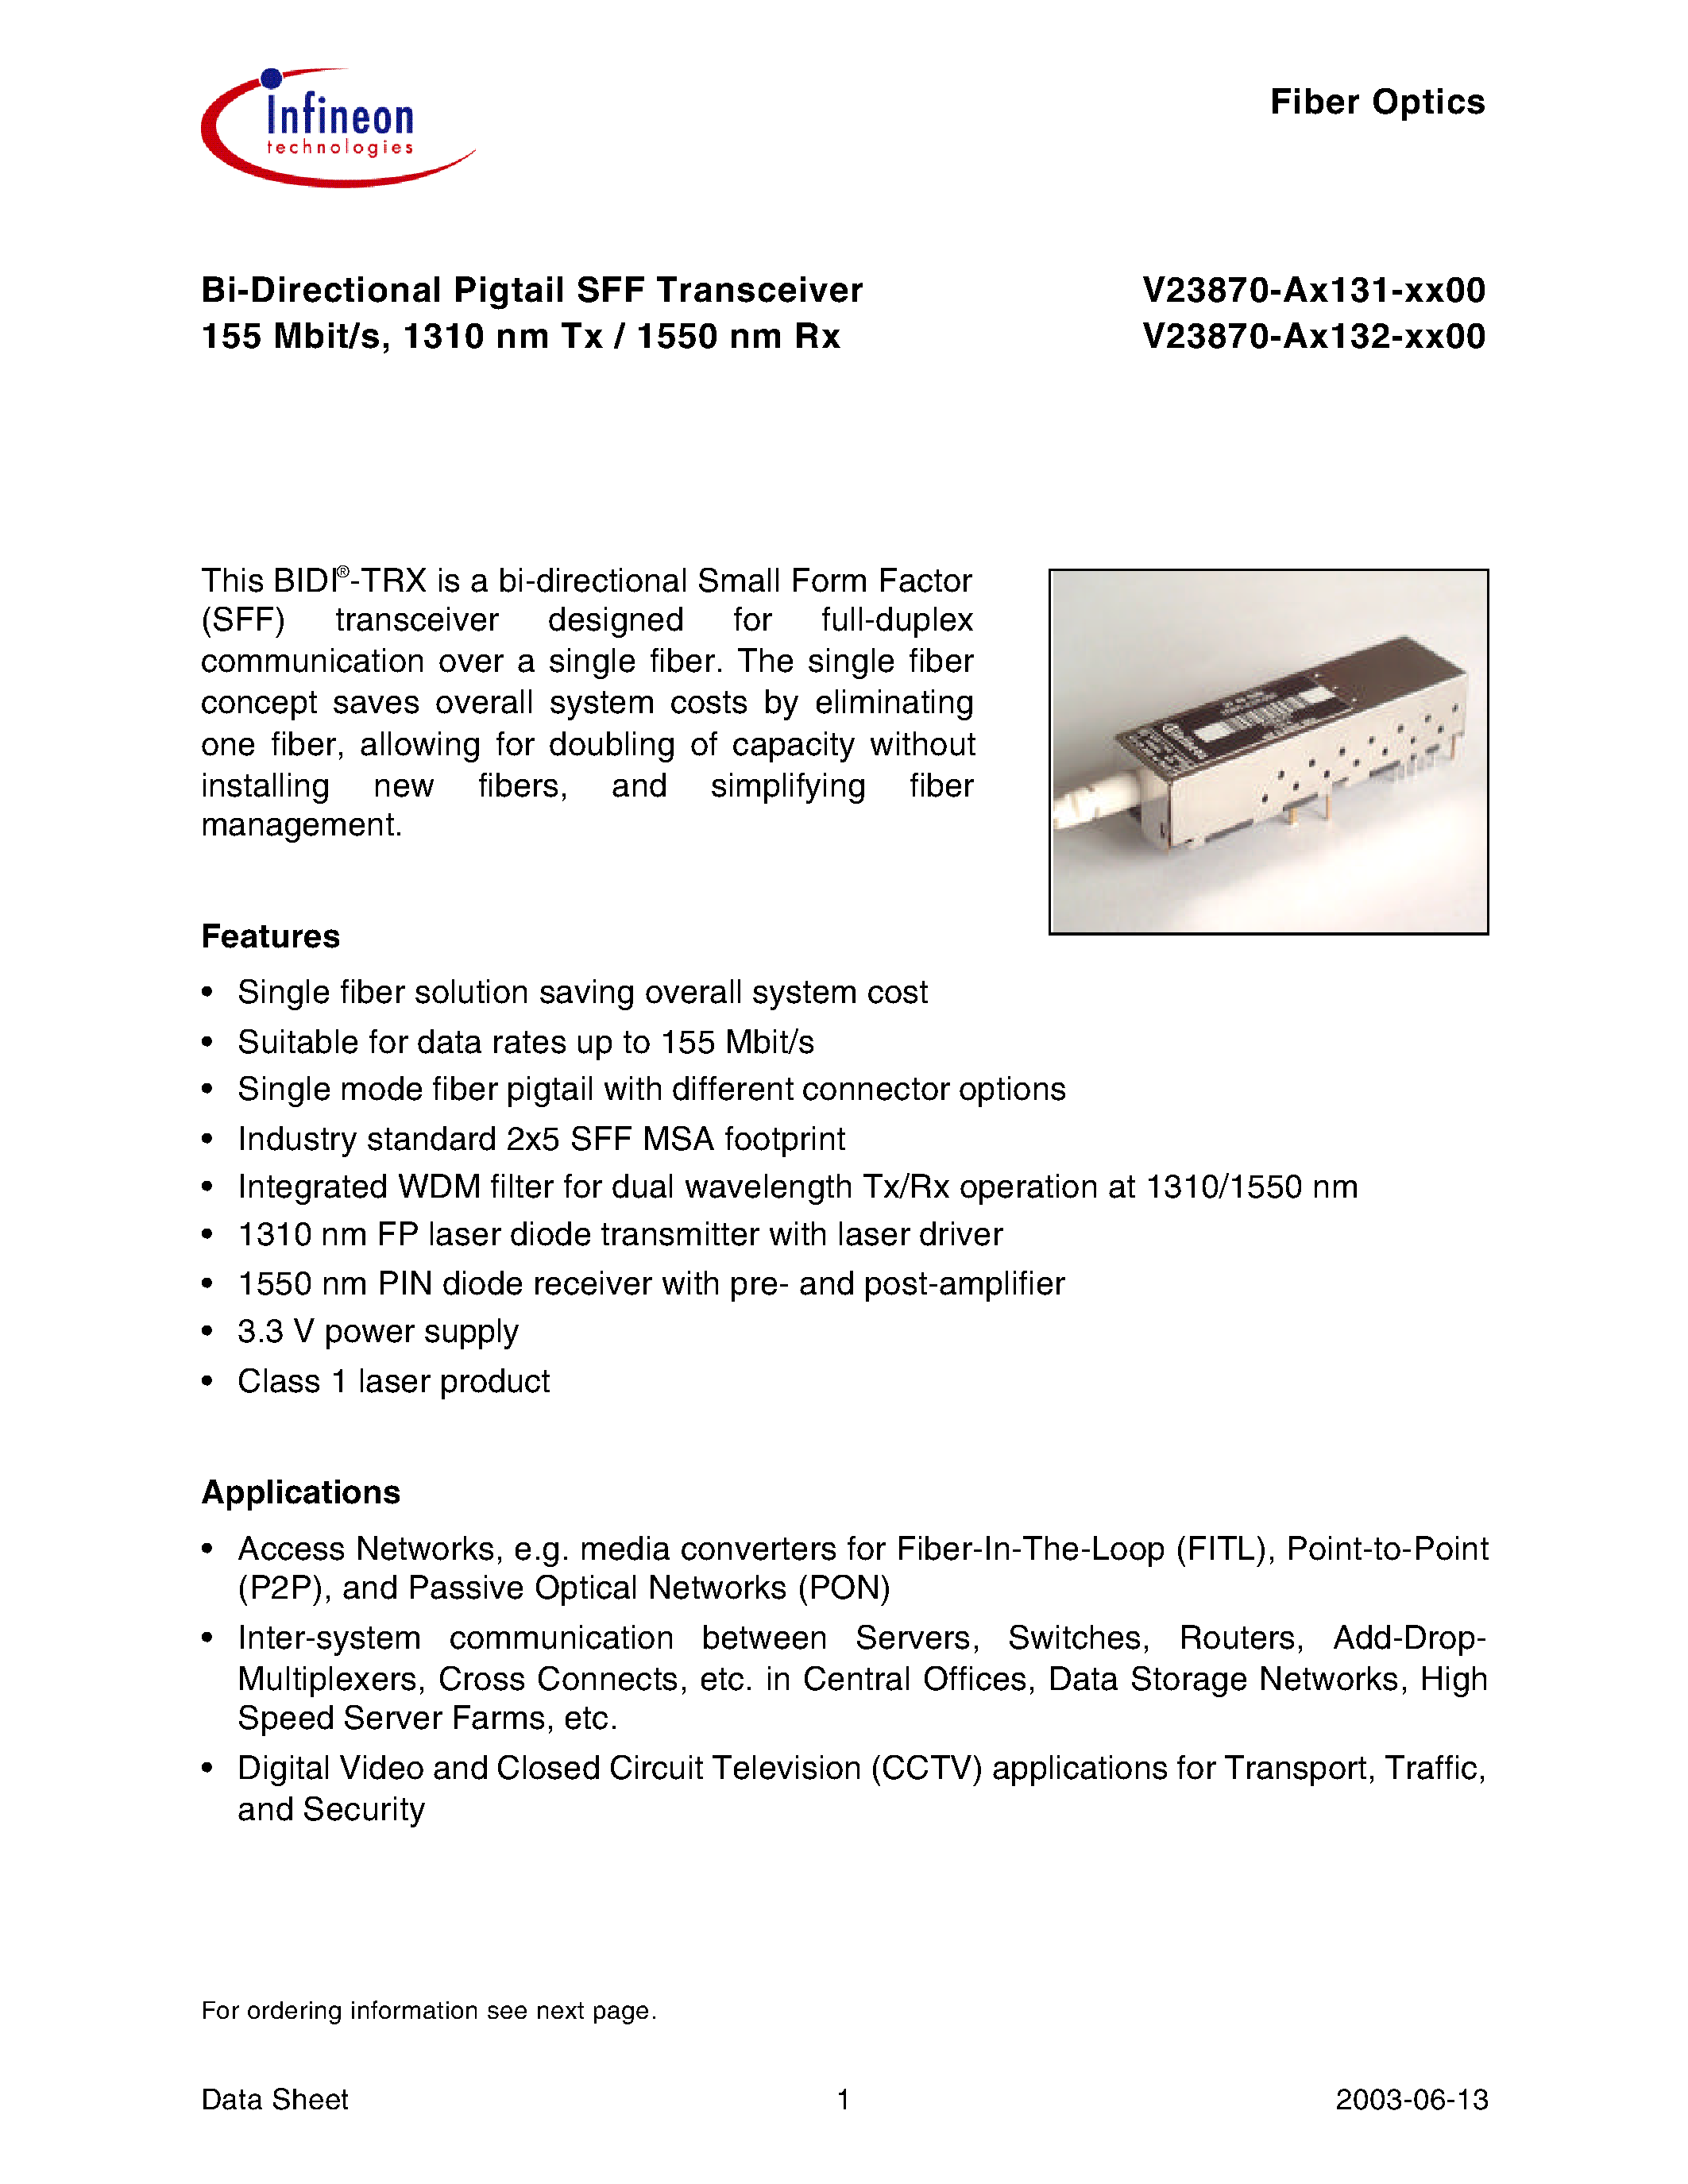 Даташит V23870-A3132-A200 - Bi-Directional Pigtail SFF Transceiver 155 Mbit/s/ 1310 nm Tx / 1550 nm Rx страница 1